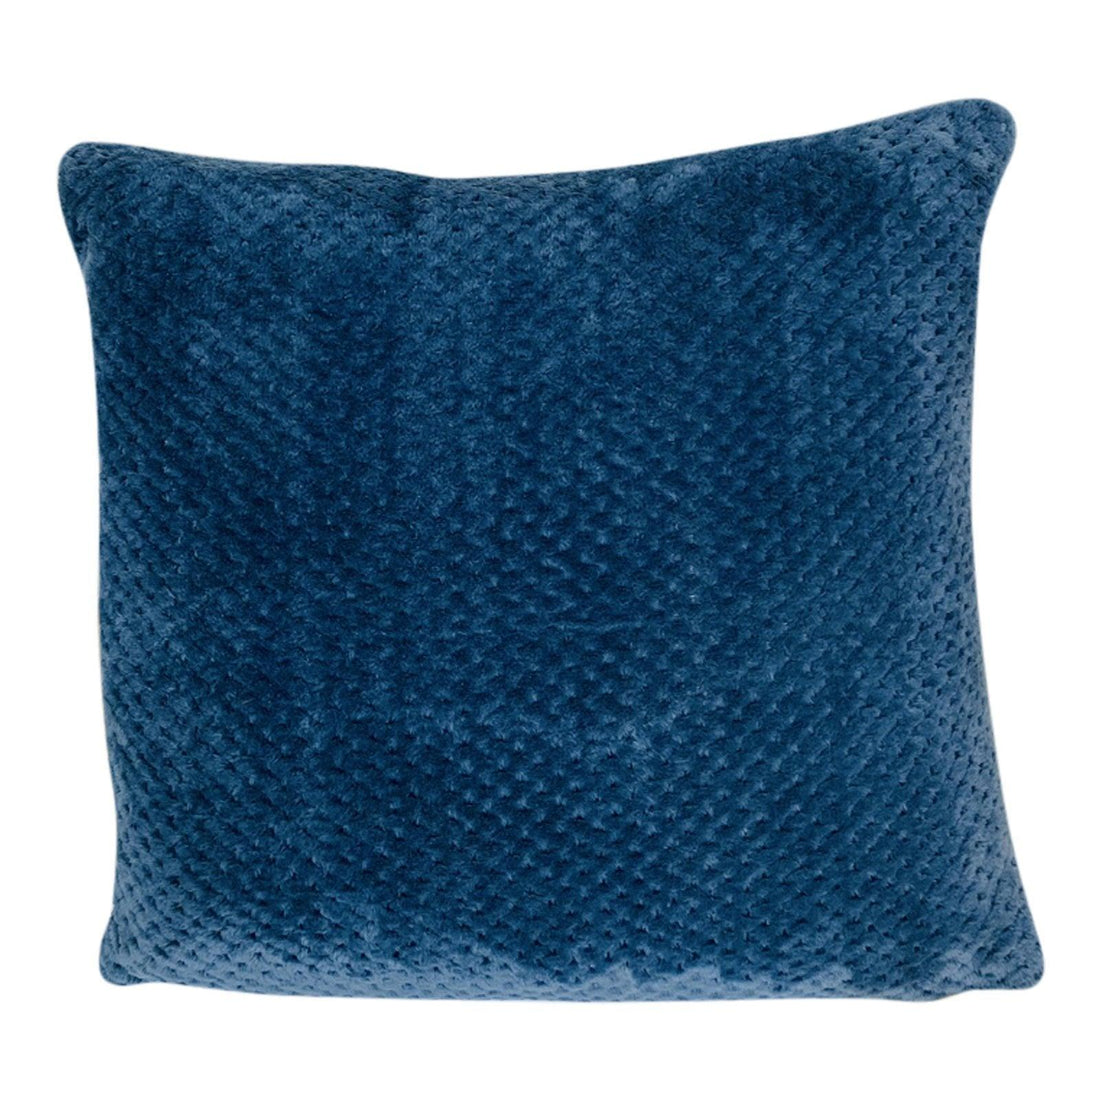 Textured Scatter Cushion Blue 45cm - £26.99 - Throw Pillows 